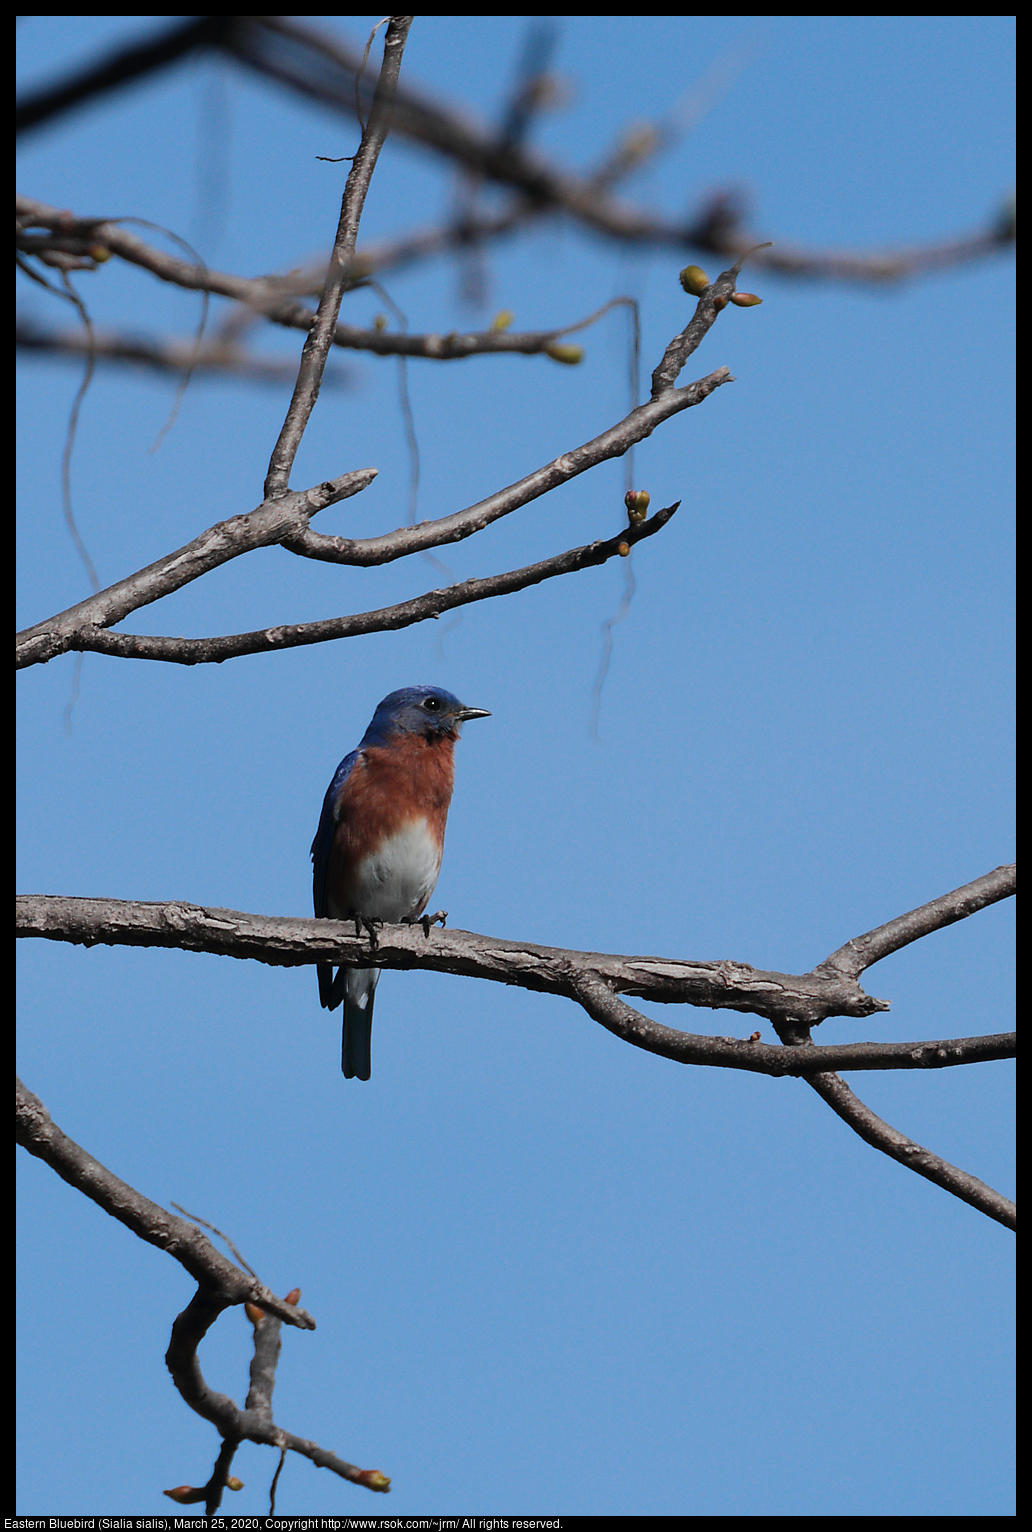 Eastern Bluebird (Sialia sialis), March 25, 2020